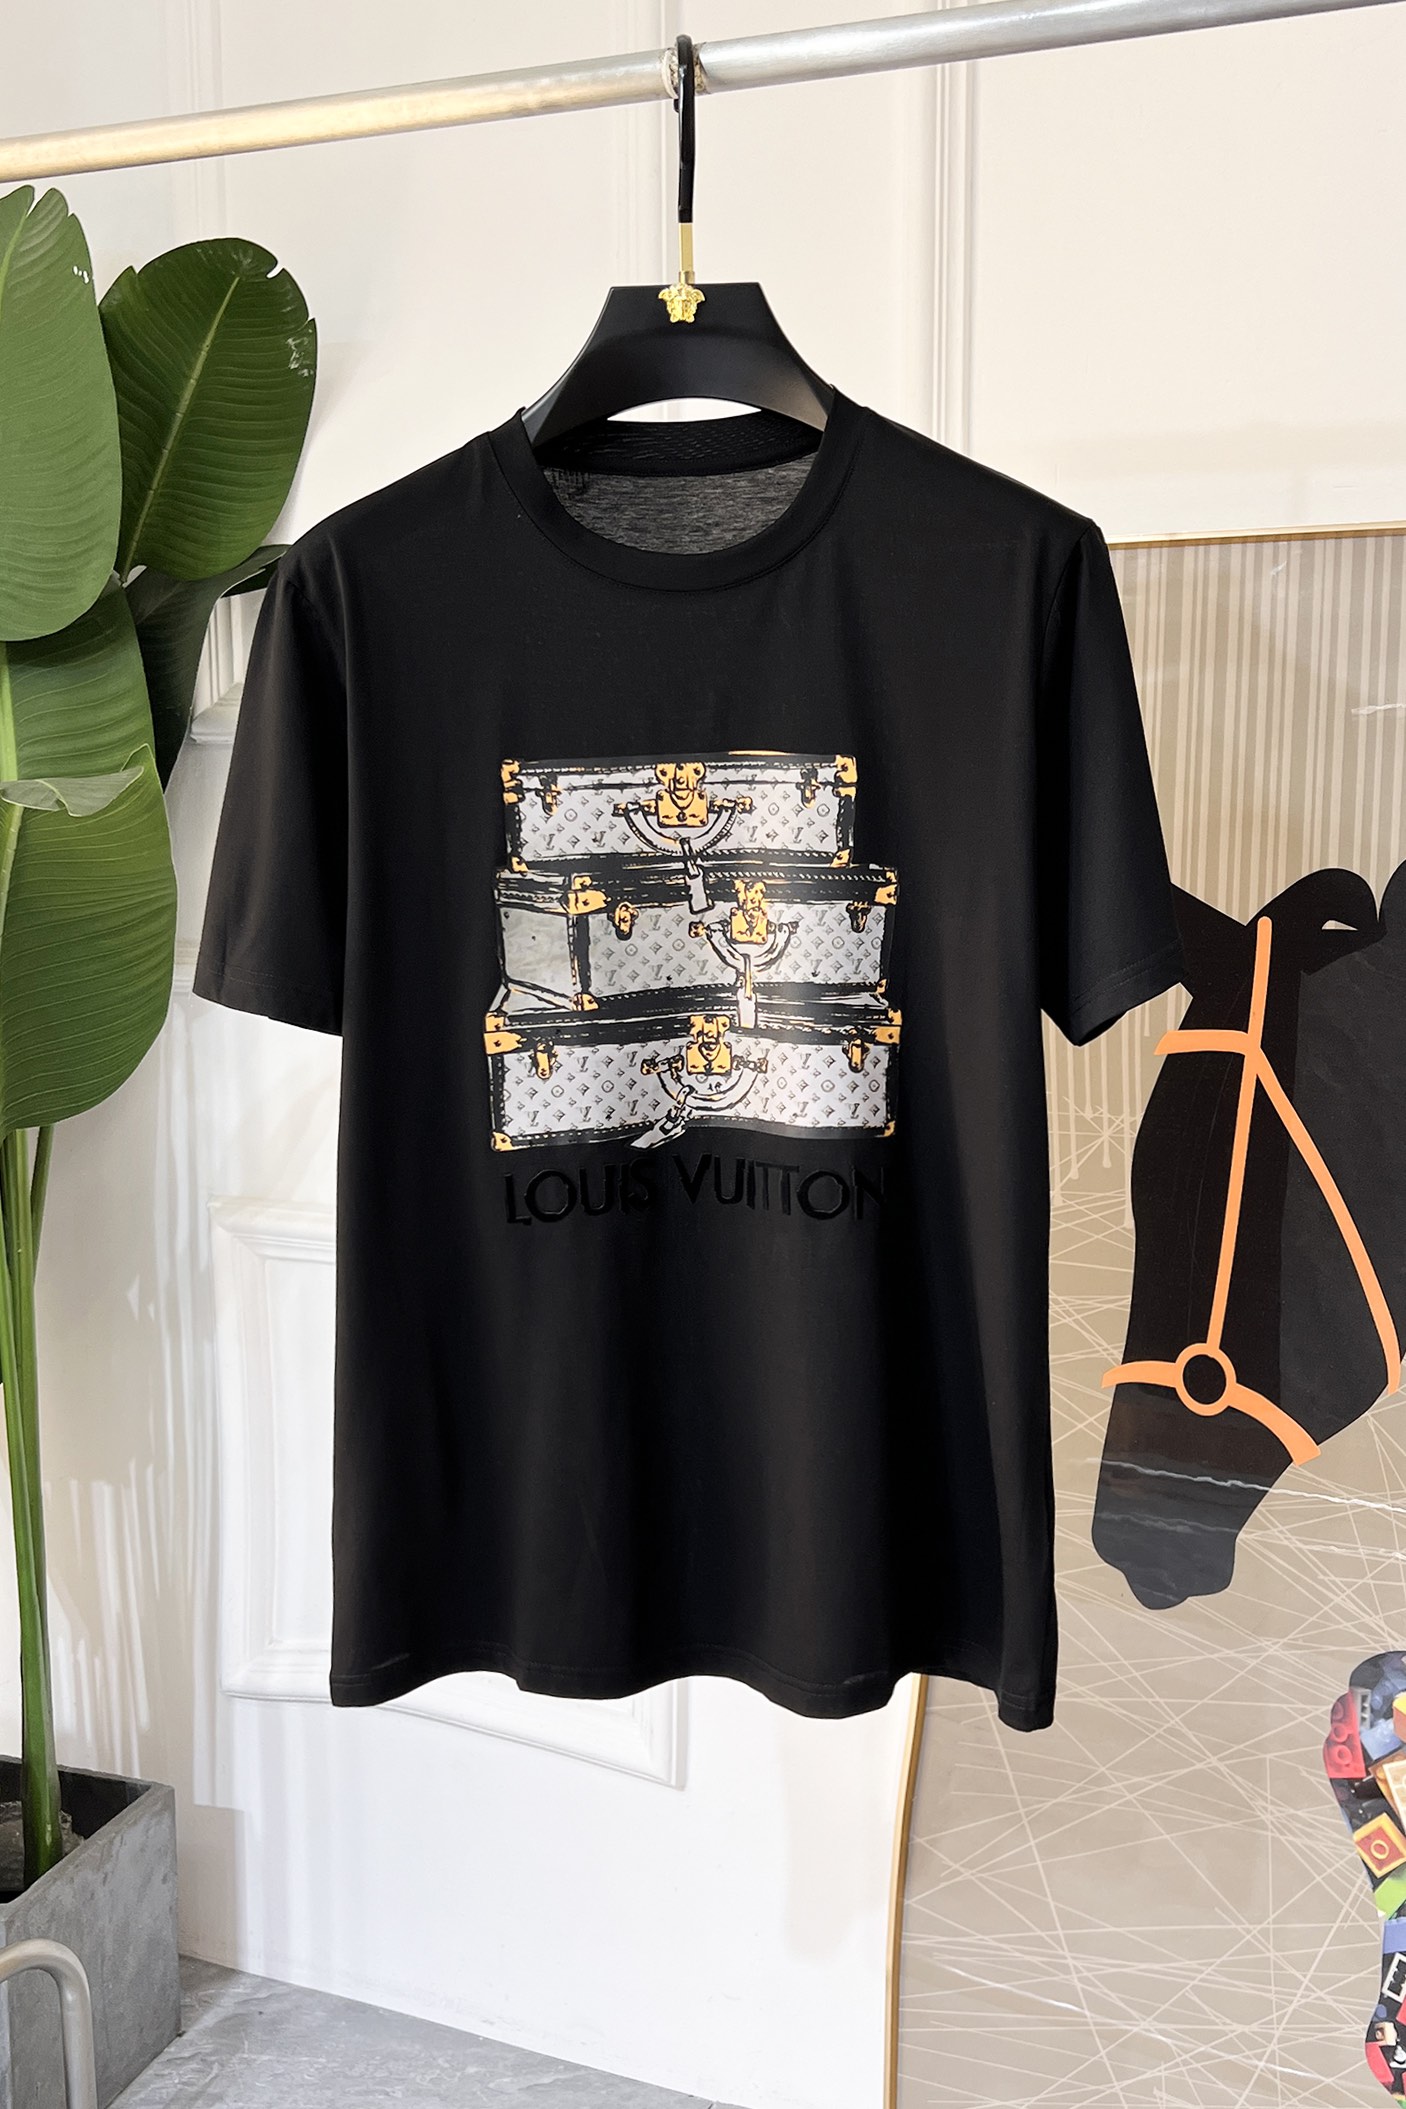 Louis Vuitton Clothing T-Shirt Cotton Mercerized Summer Collection Short Sleeve